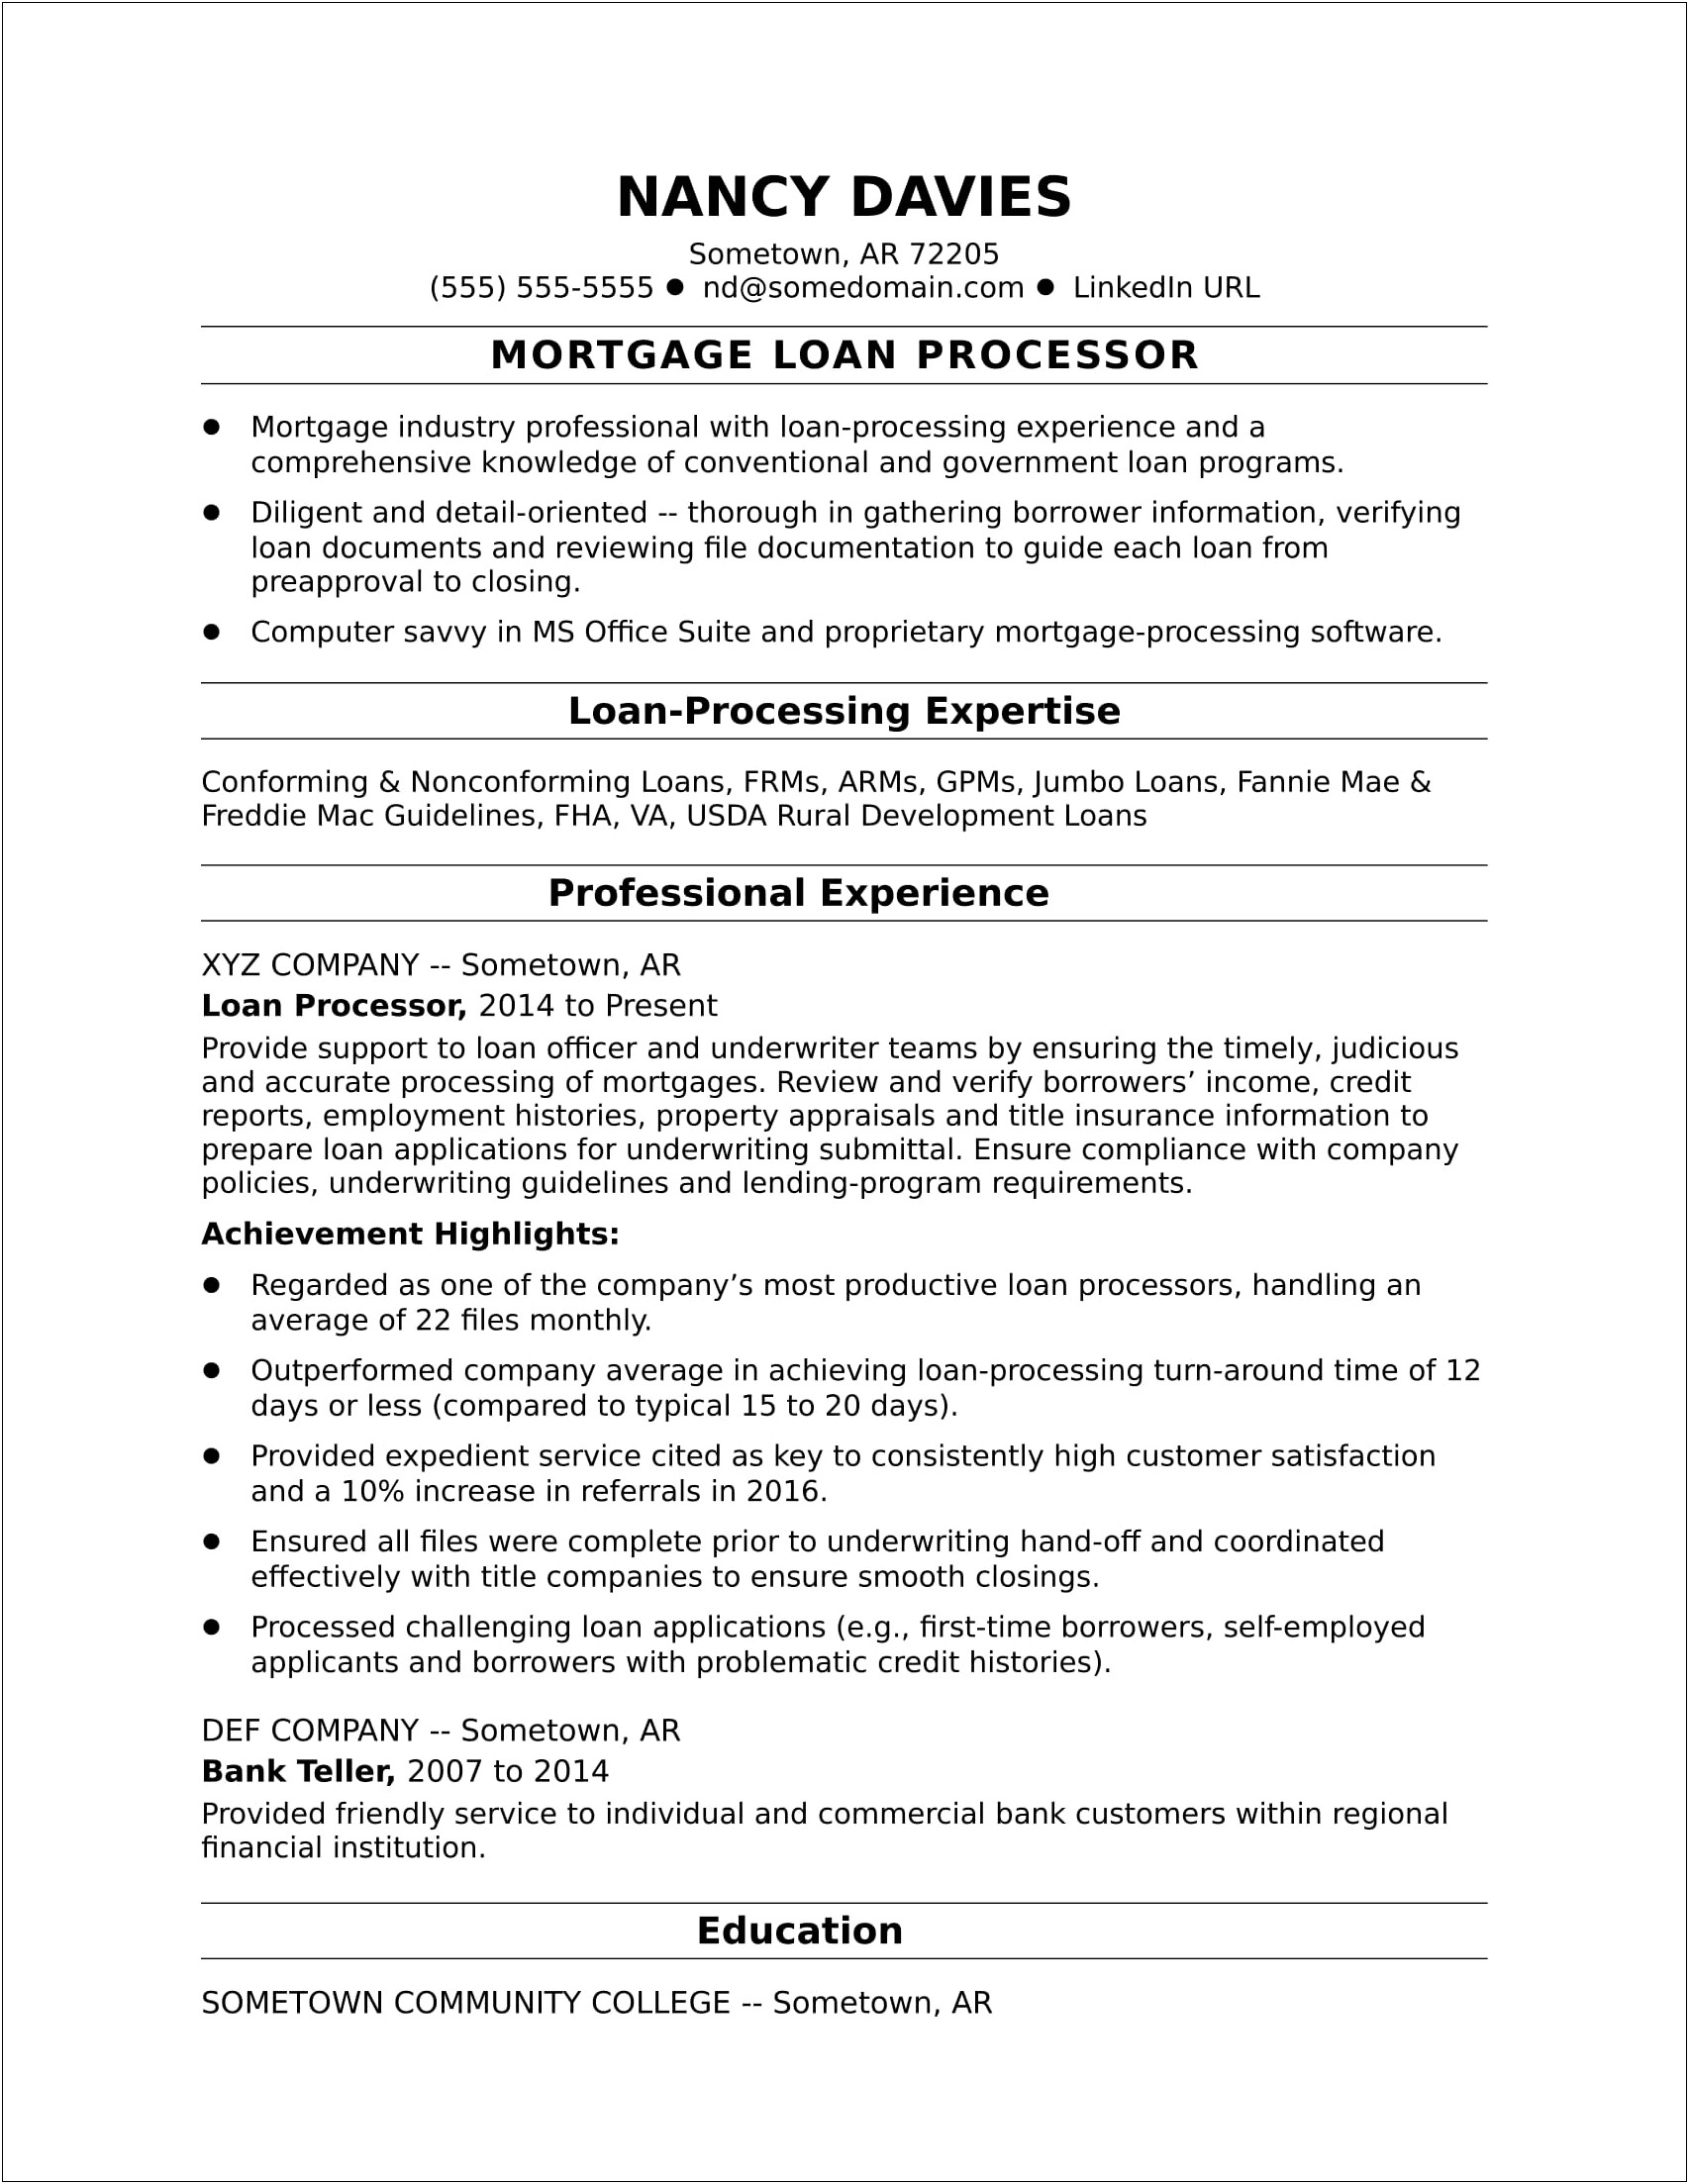 Real Estate Agents Job Description Resume